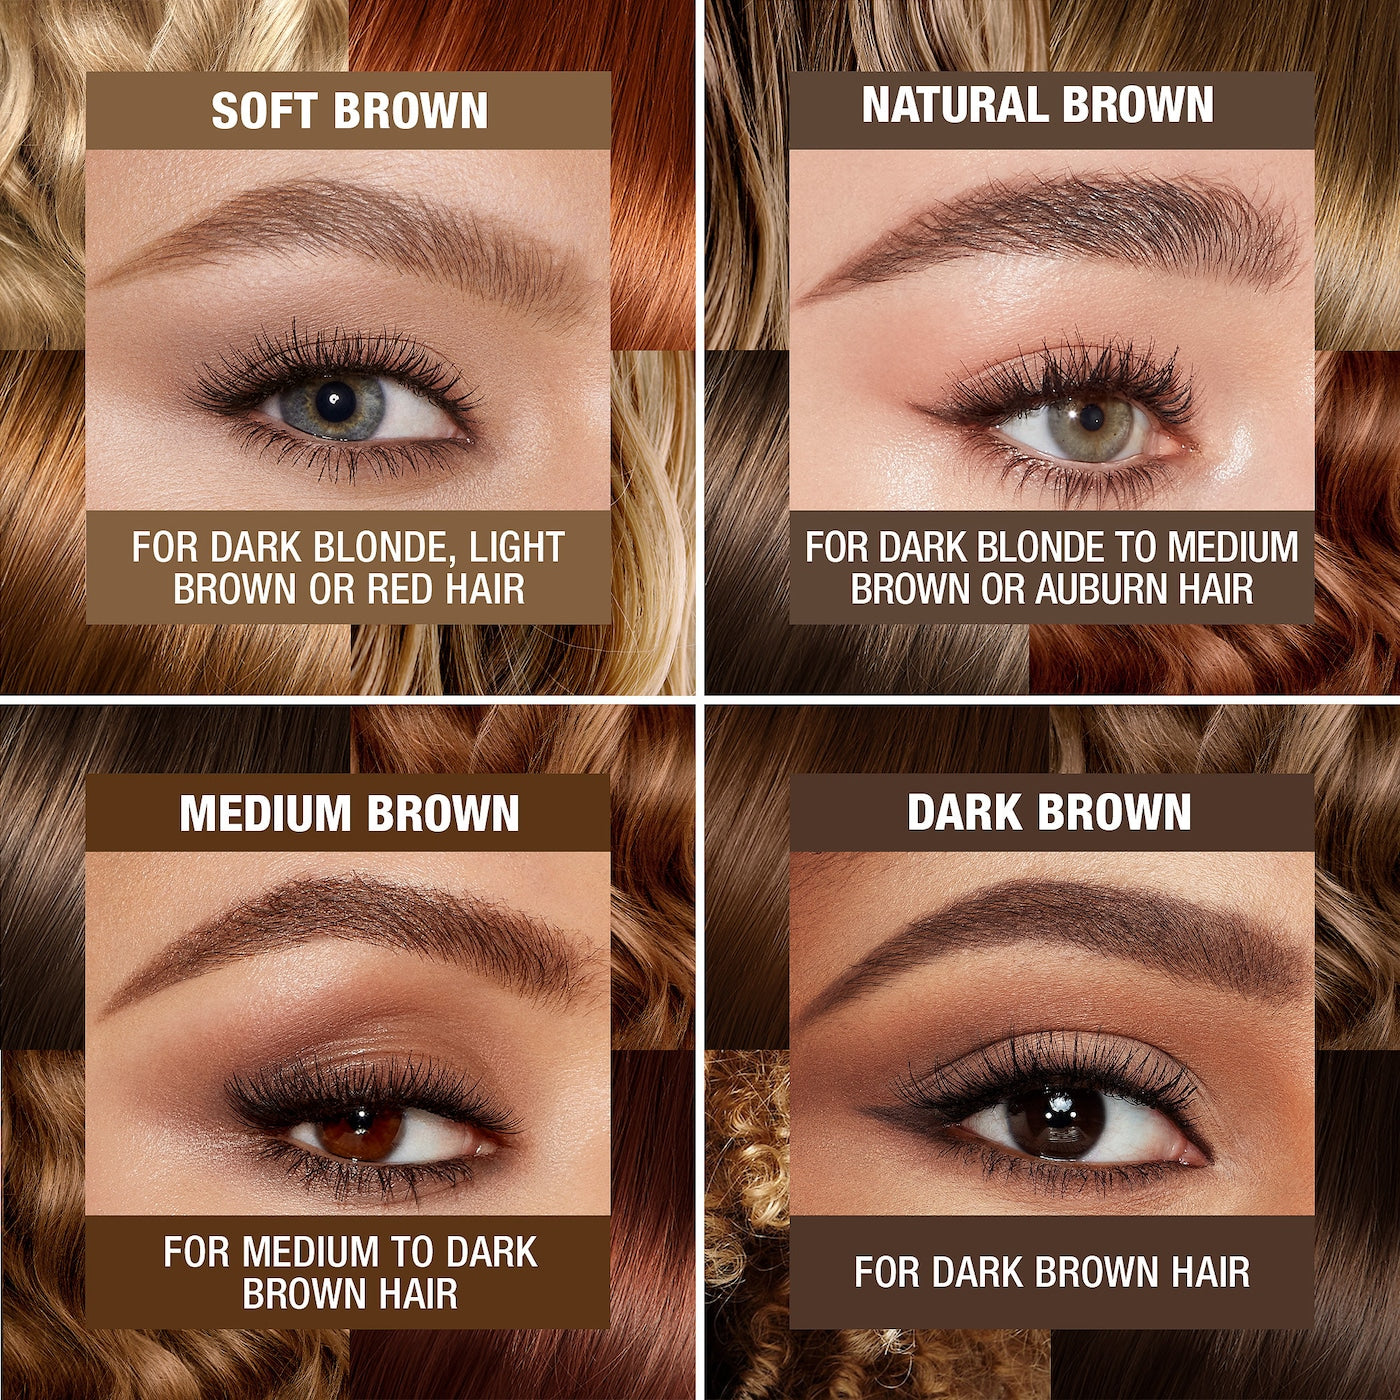 Charlotte Tilbury | Brow Cheat Refillable Hair-Like Eyebrow Pencil | Medium Brown